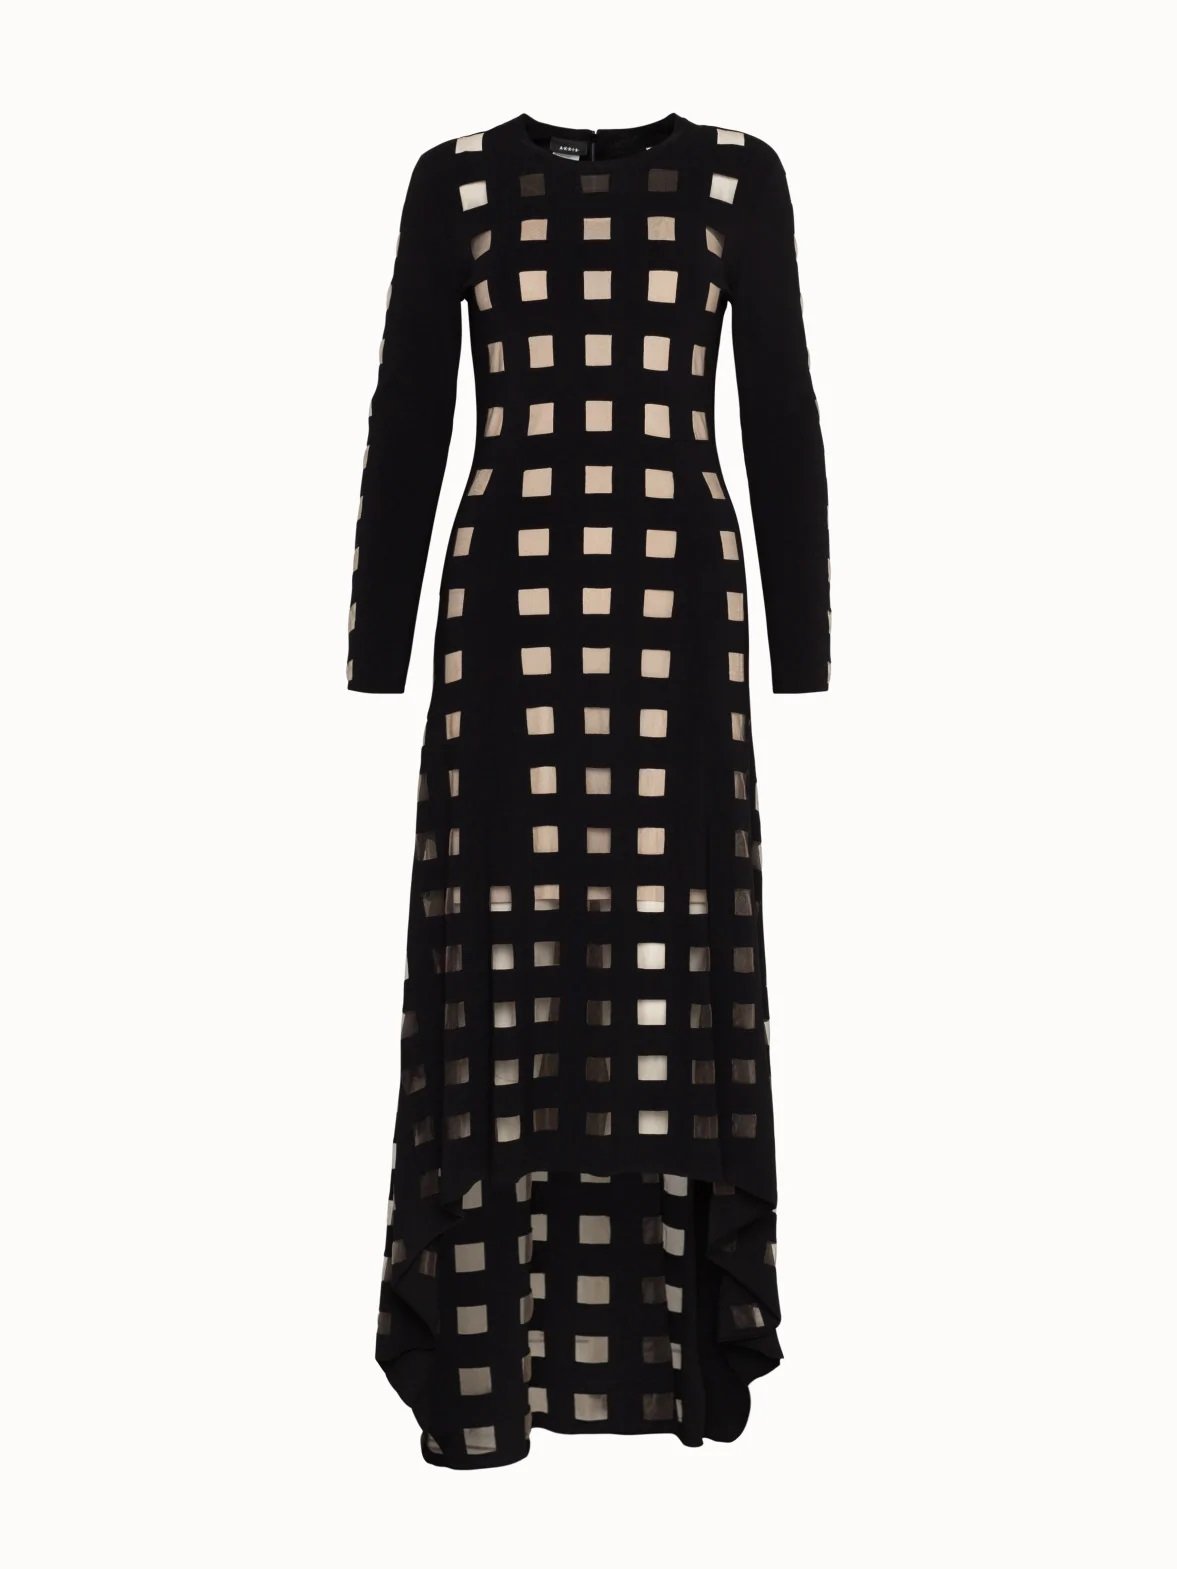 Akris Knit Dress with Square Intarsia Pattern.jpg